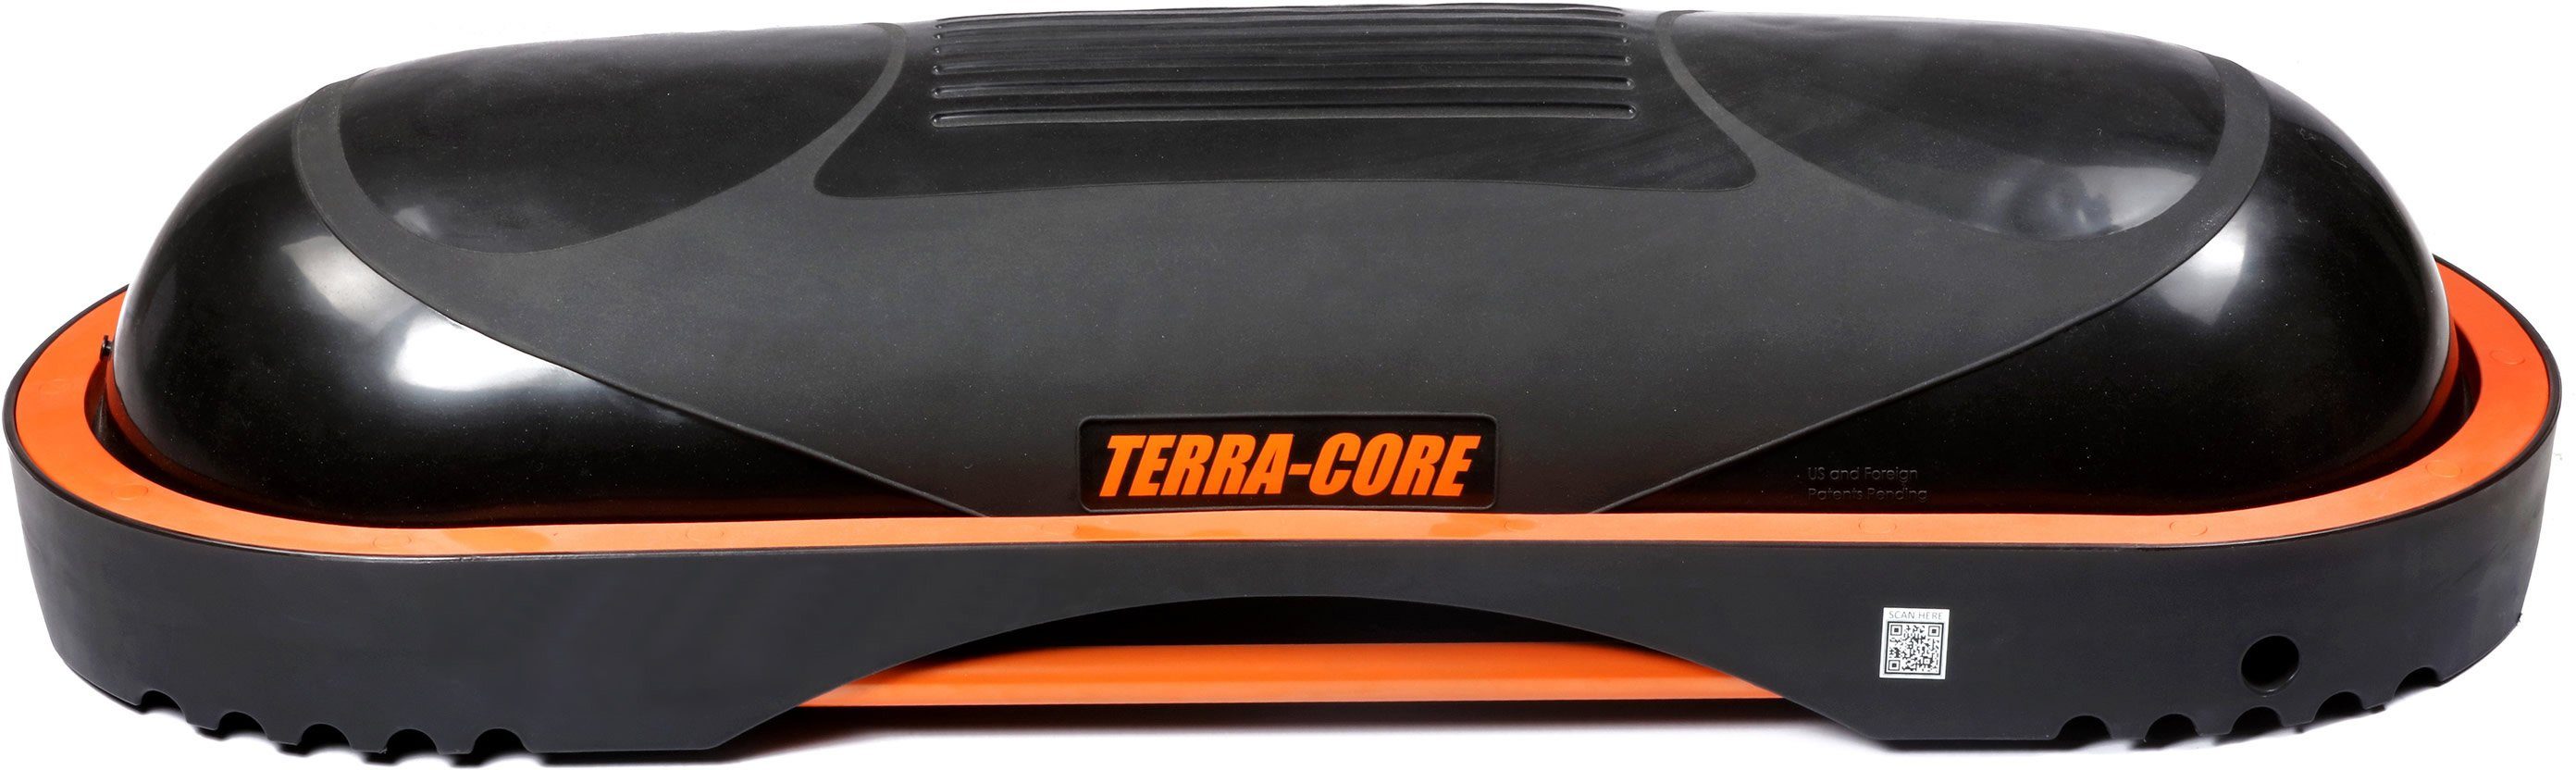 Terra Core Balancetrainer Terra Core, Universelle Workout Bench, Stepp und Balance Board | Balance Boards